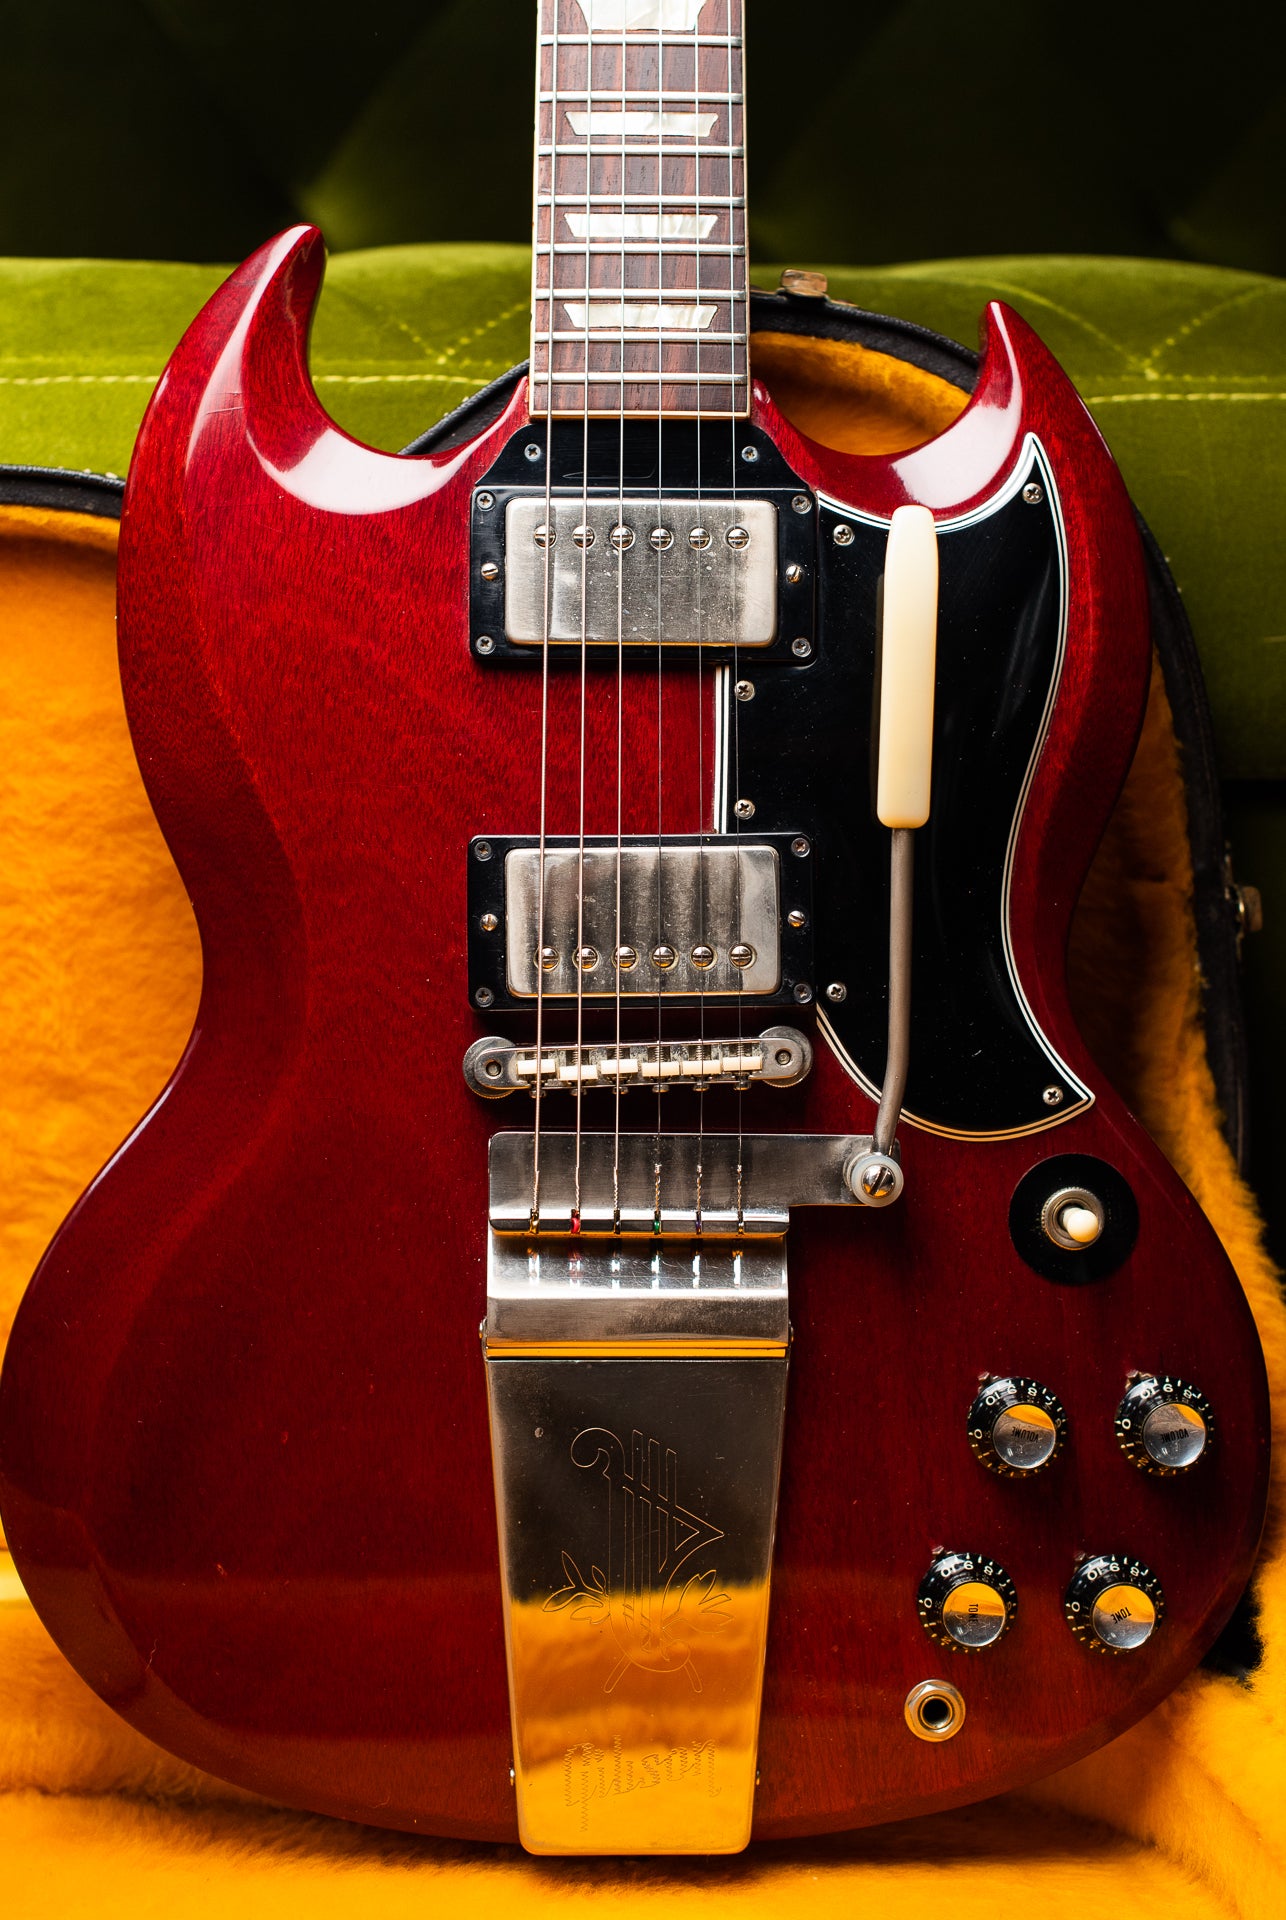 1965 Gibson SG Standard red guitar